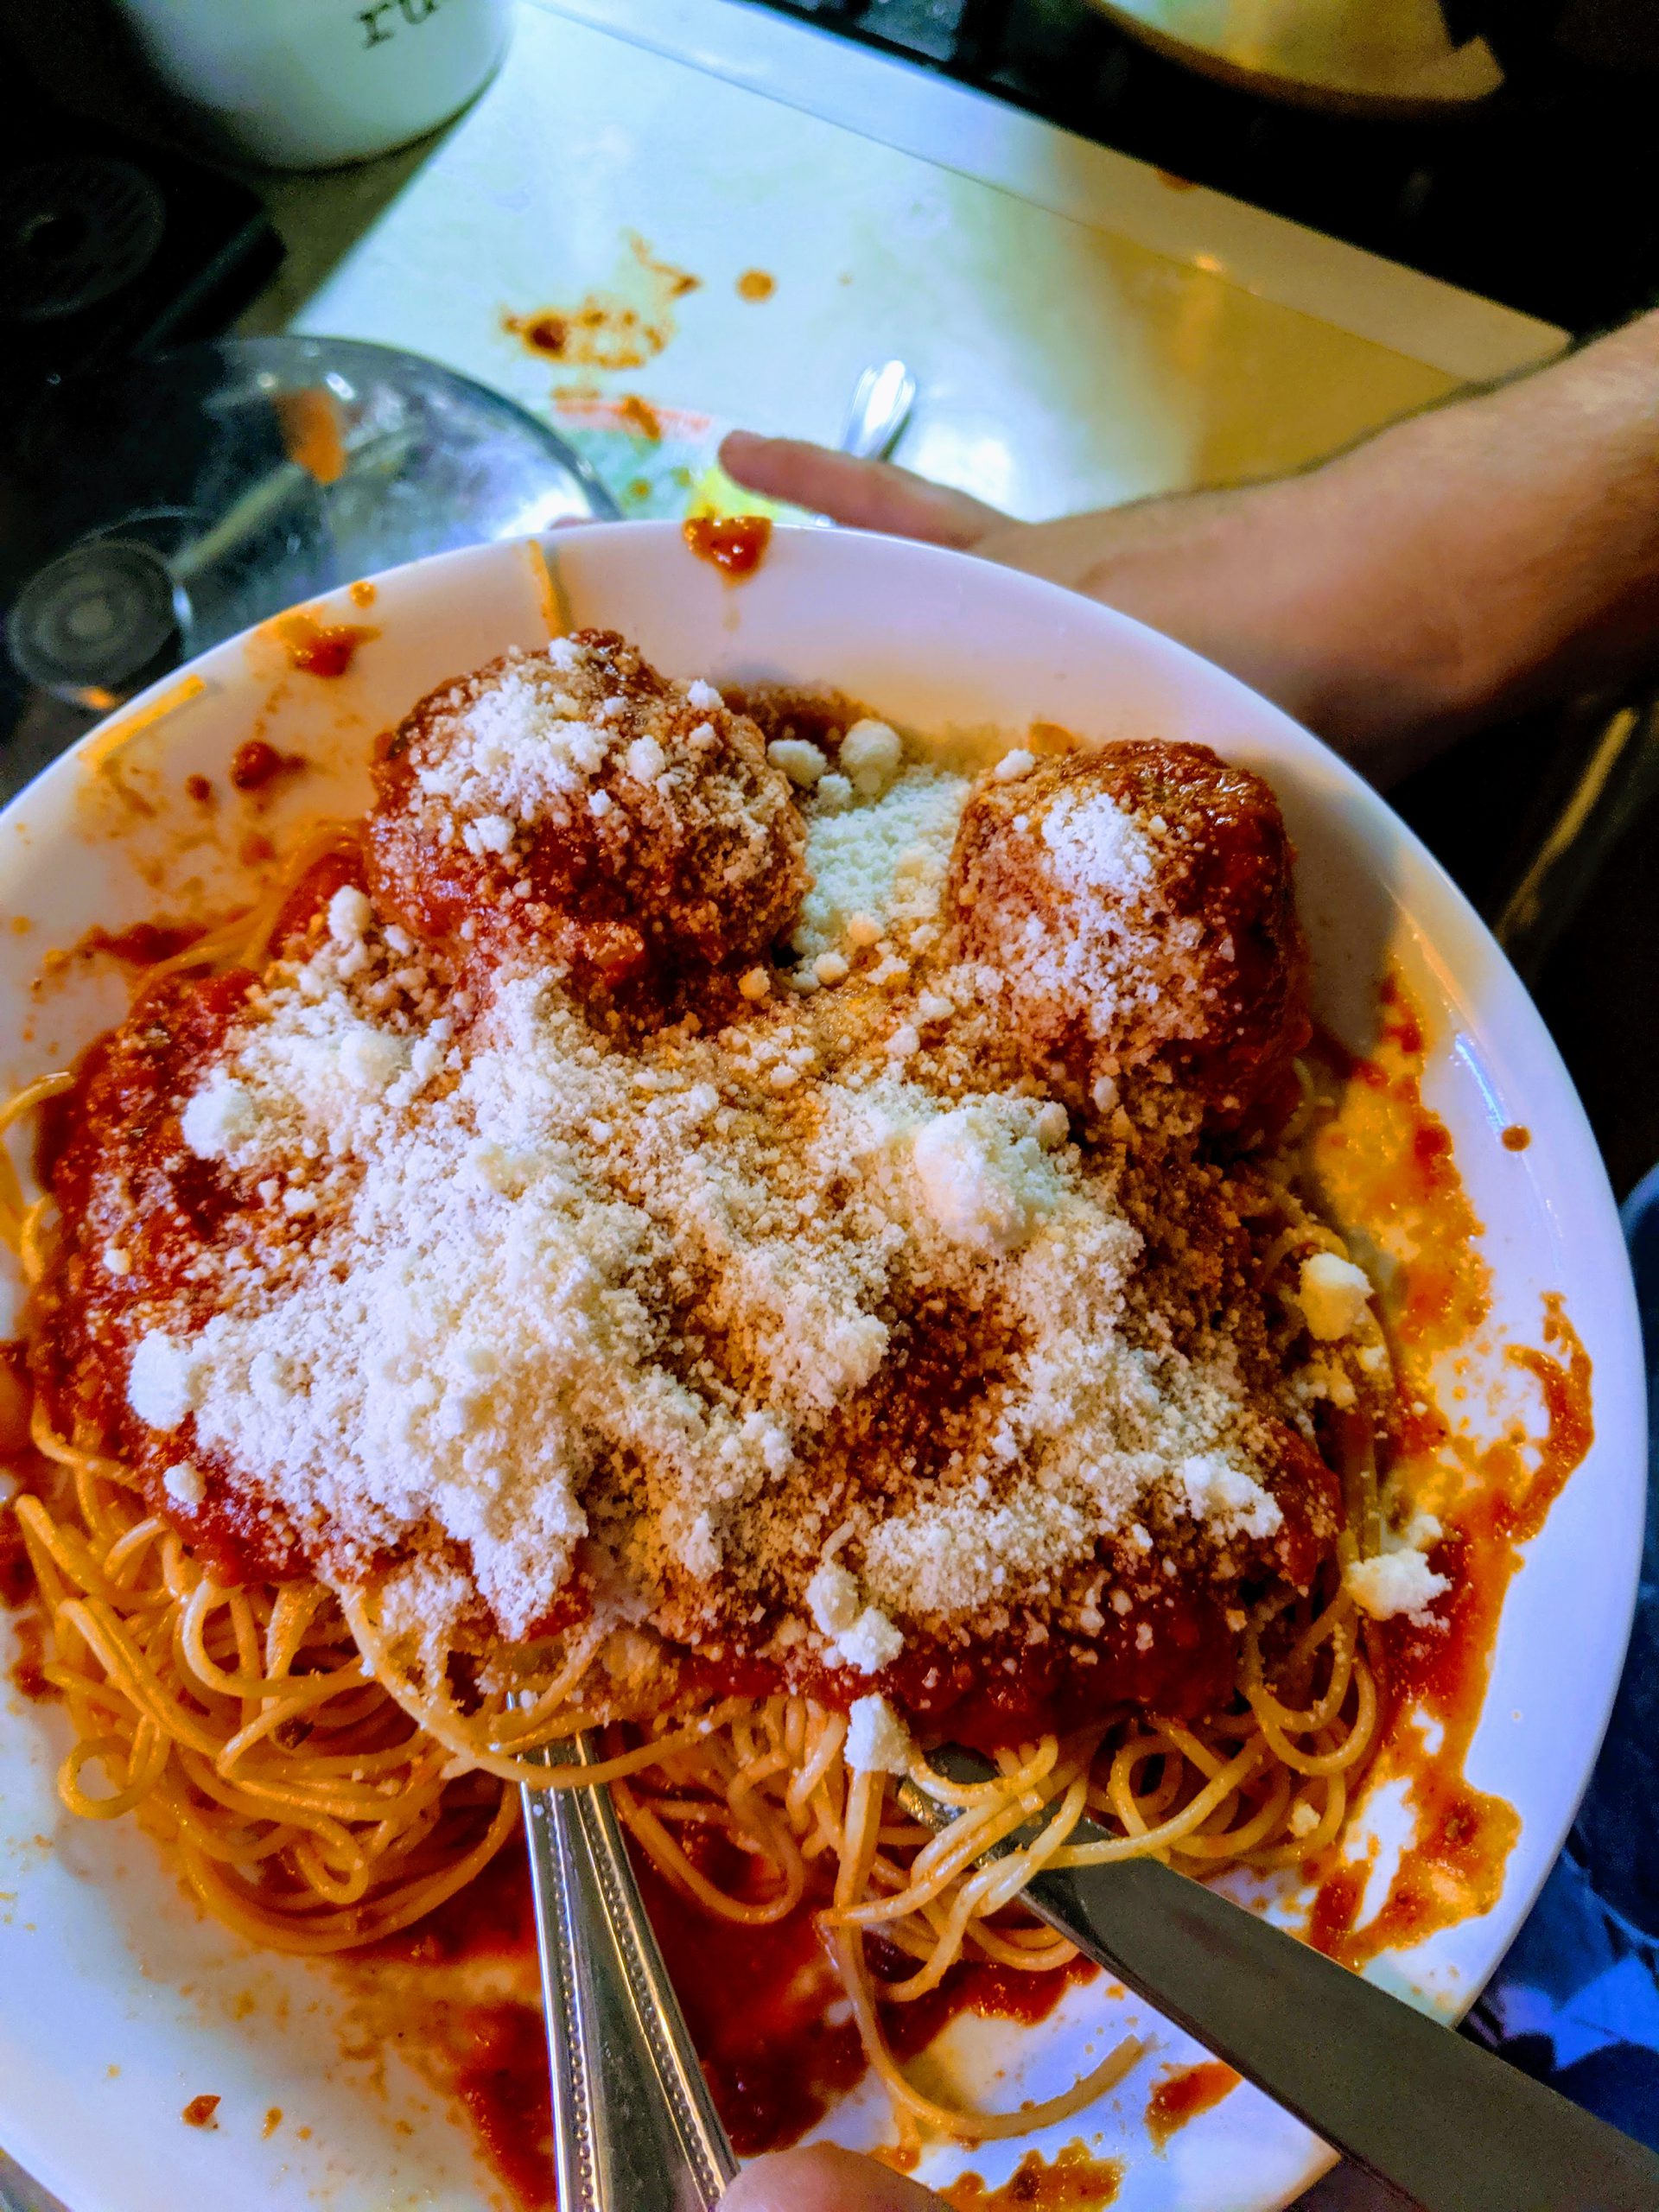 (Spaghetti) Sauce and Meatballs